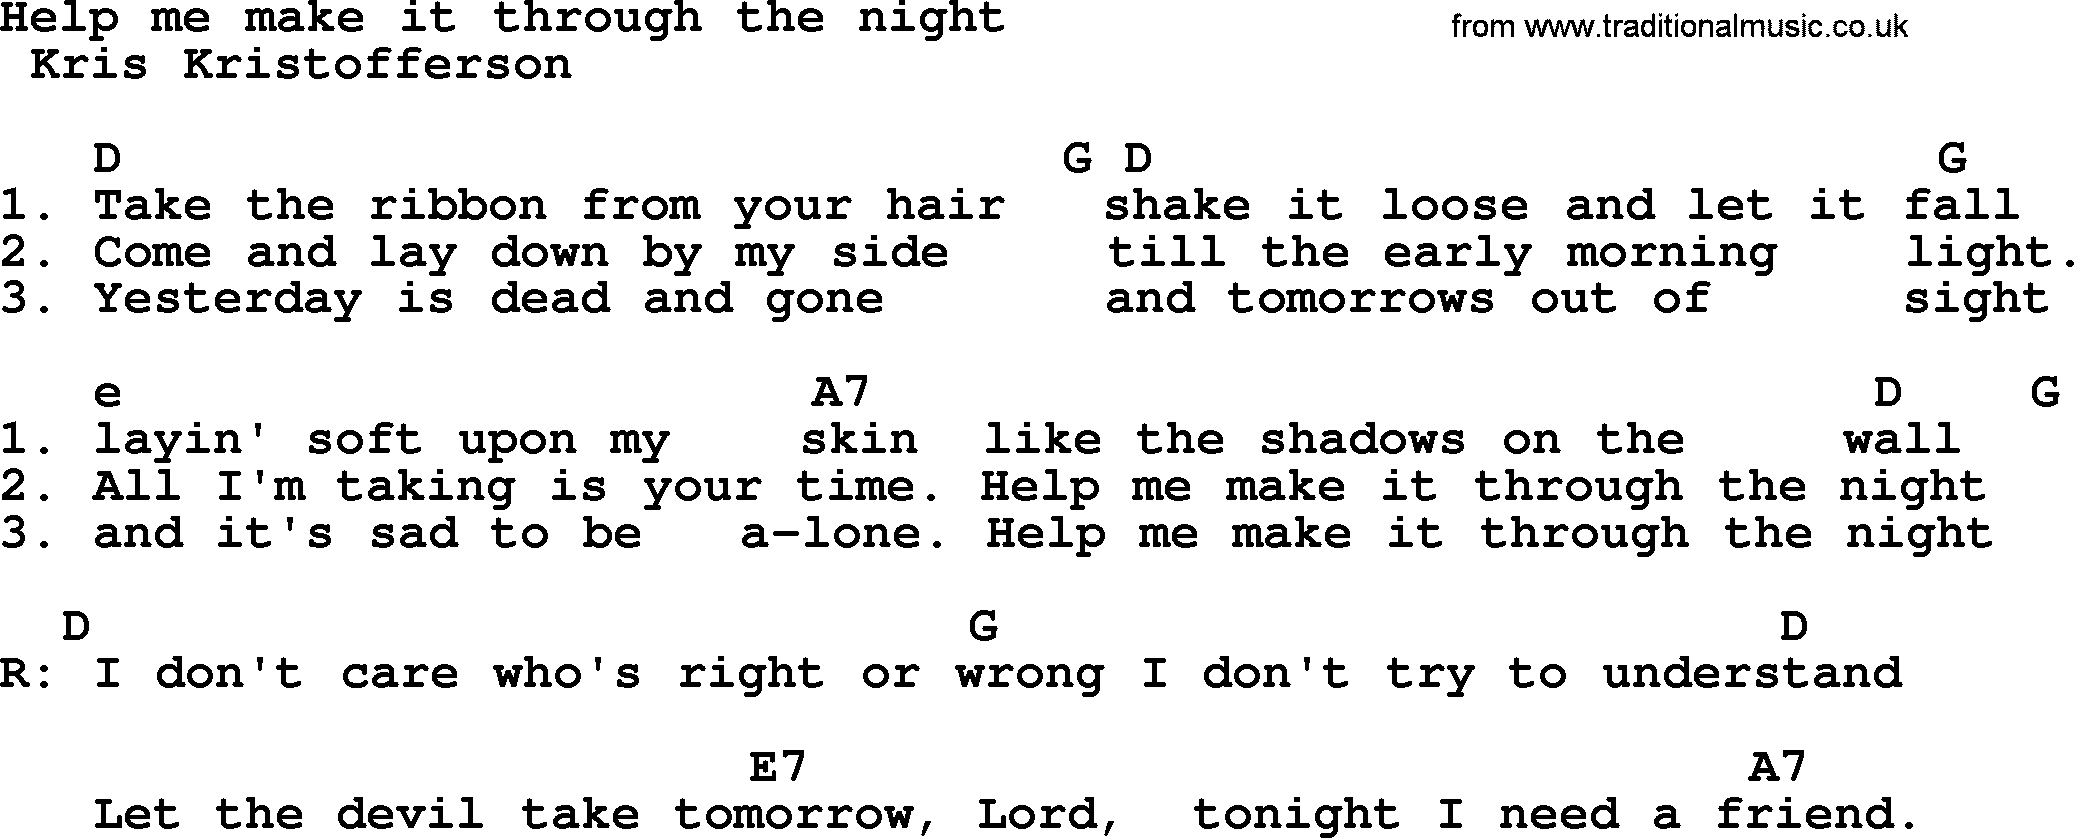 Kris Kristofferson song: Help Me Make It Through The Night lyrics and chords